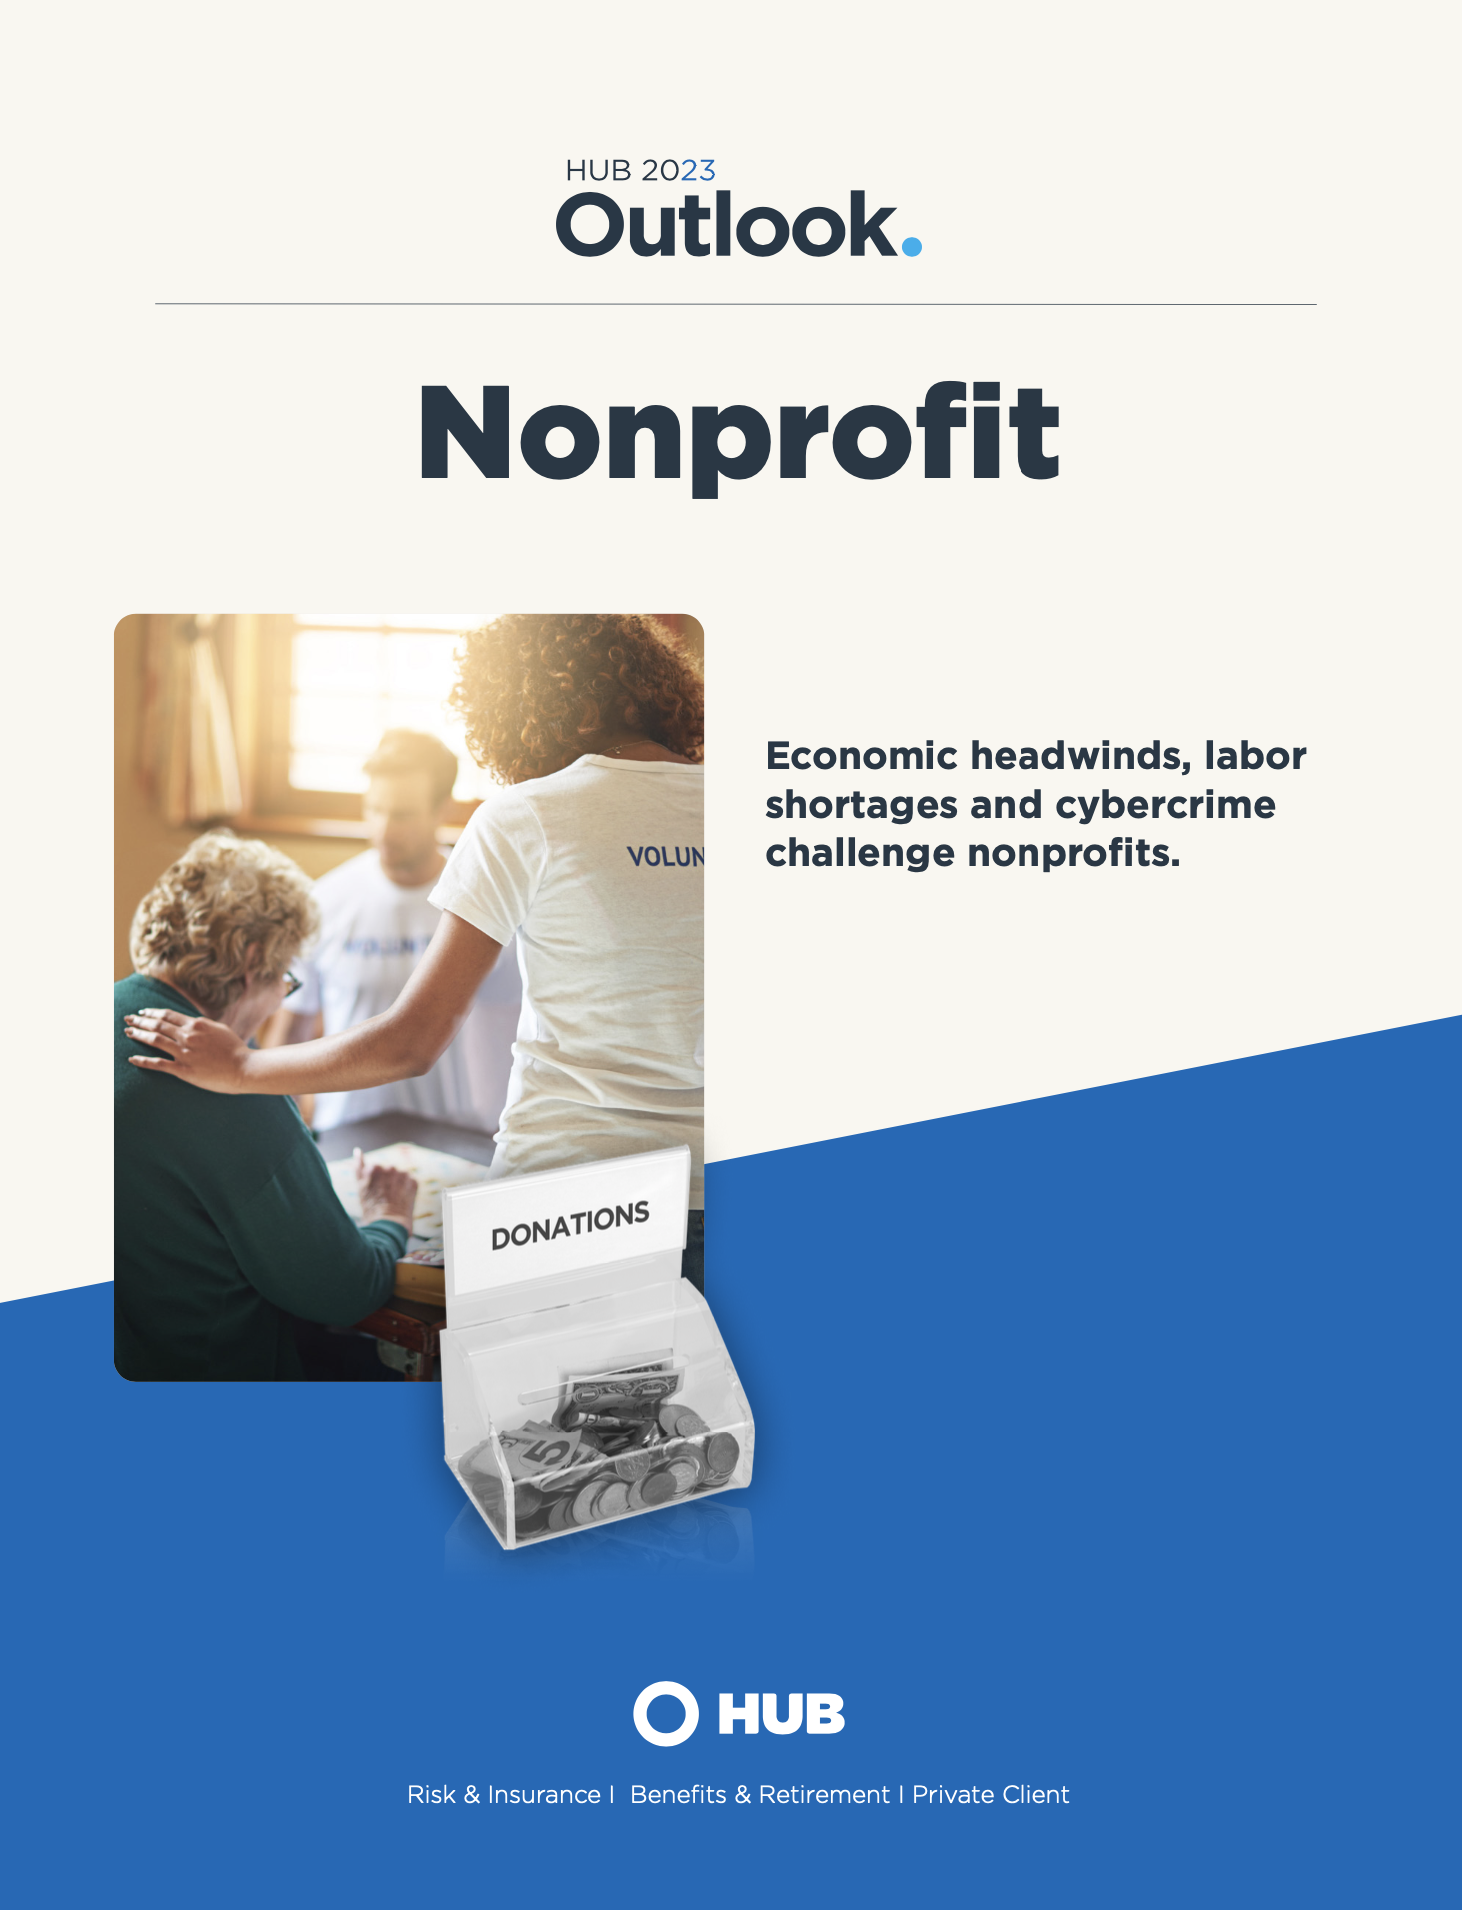 HUB 2023 Outlook: Nonprofit